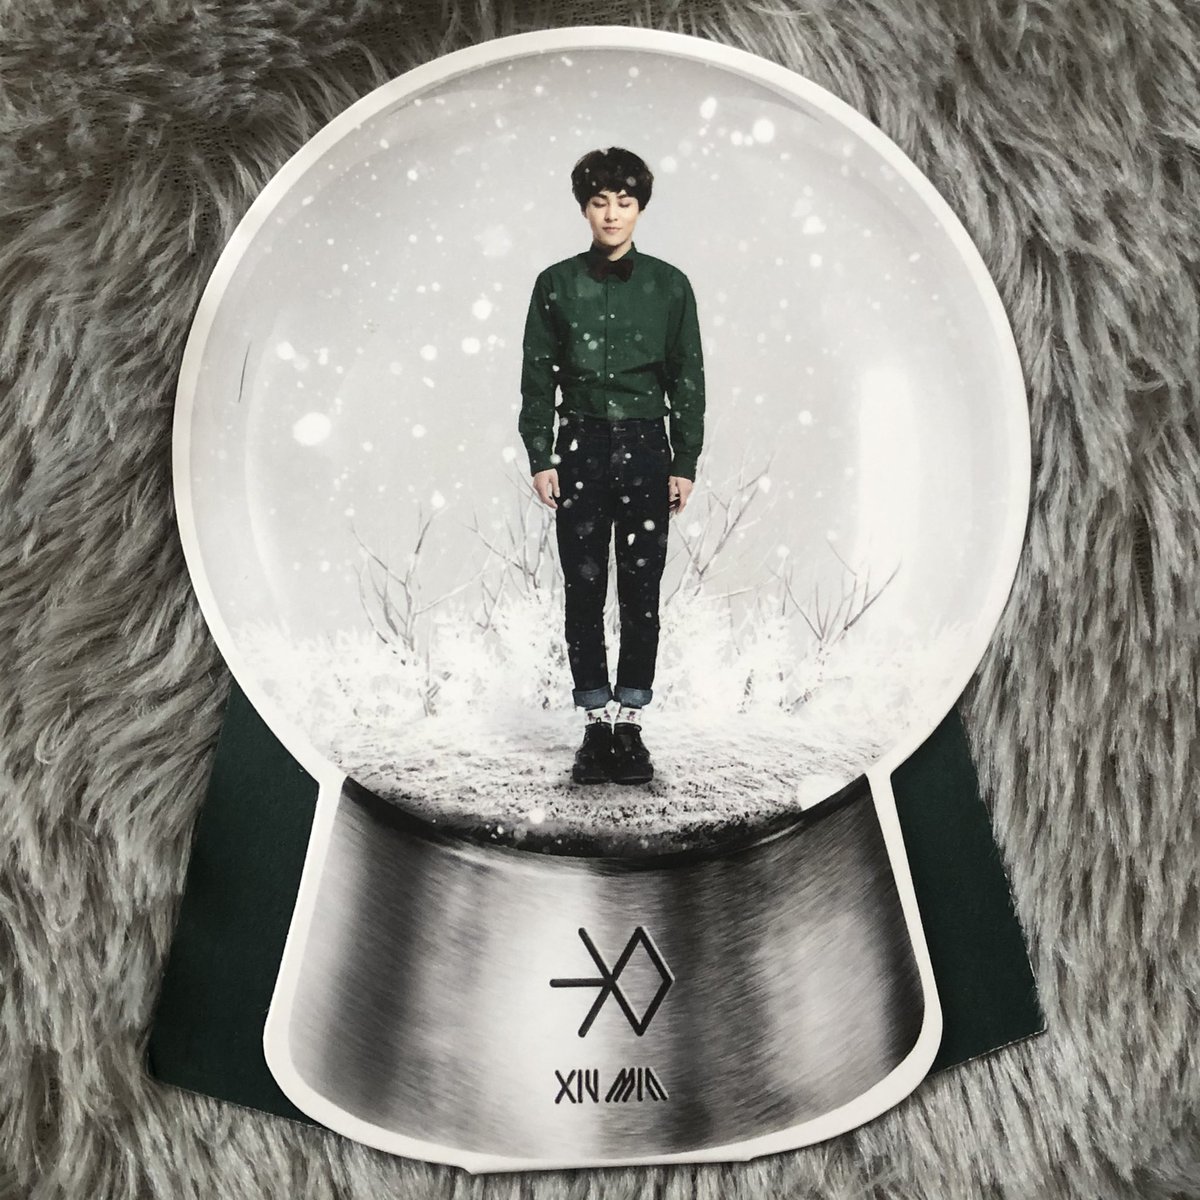 WTS Xiumin photocard / pcXOXO Miracle in December snowglobemasih mulus bgtt official album dm for details! #wts  #exophotocard  #xiuminphotocard  #xiuminpc  #xiumin